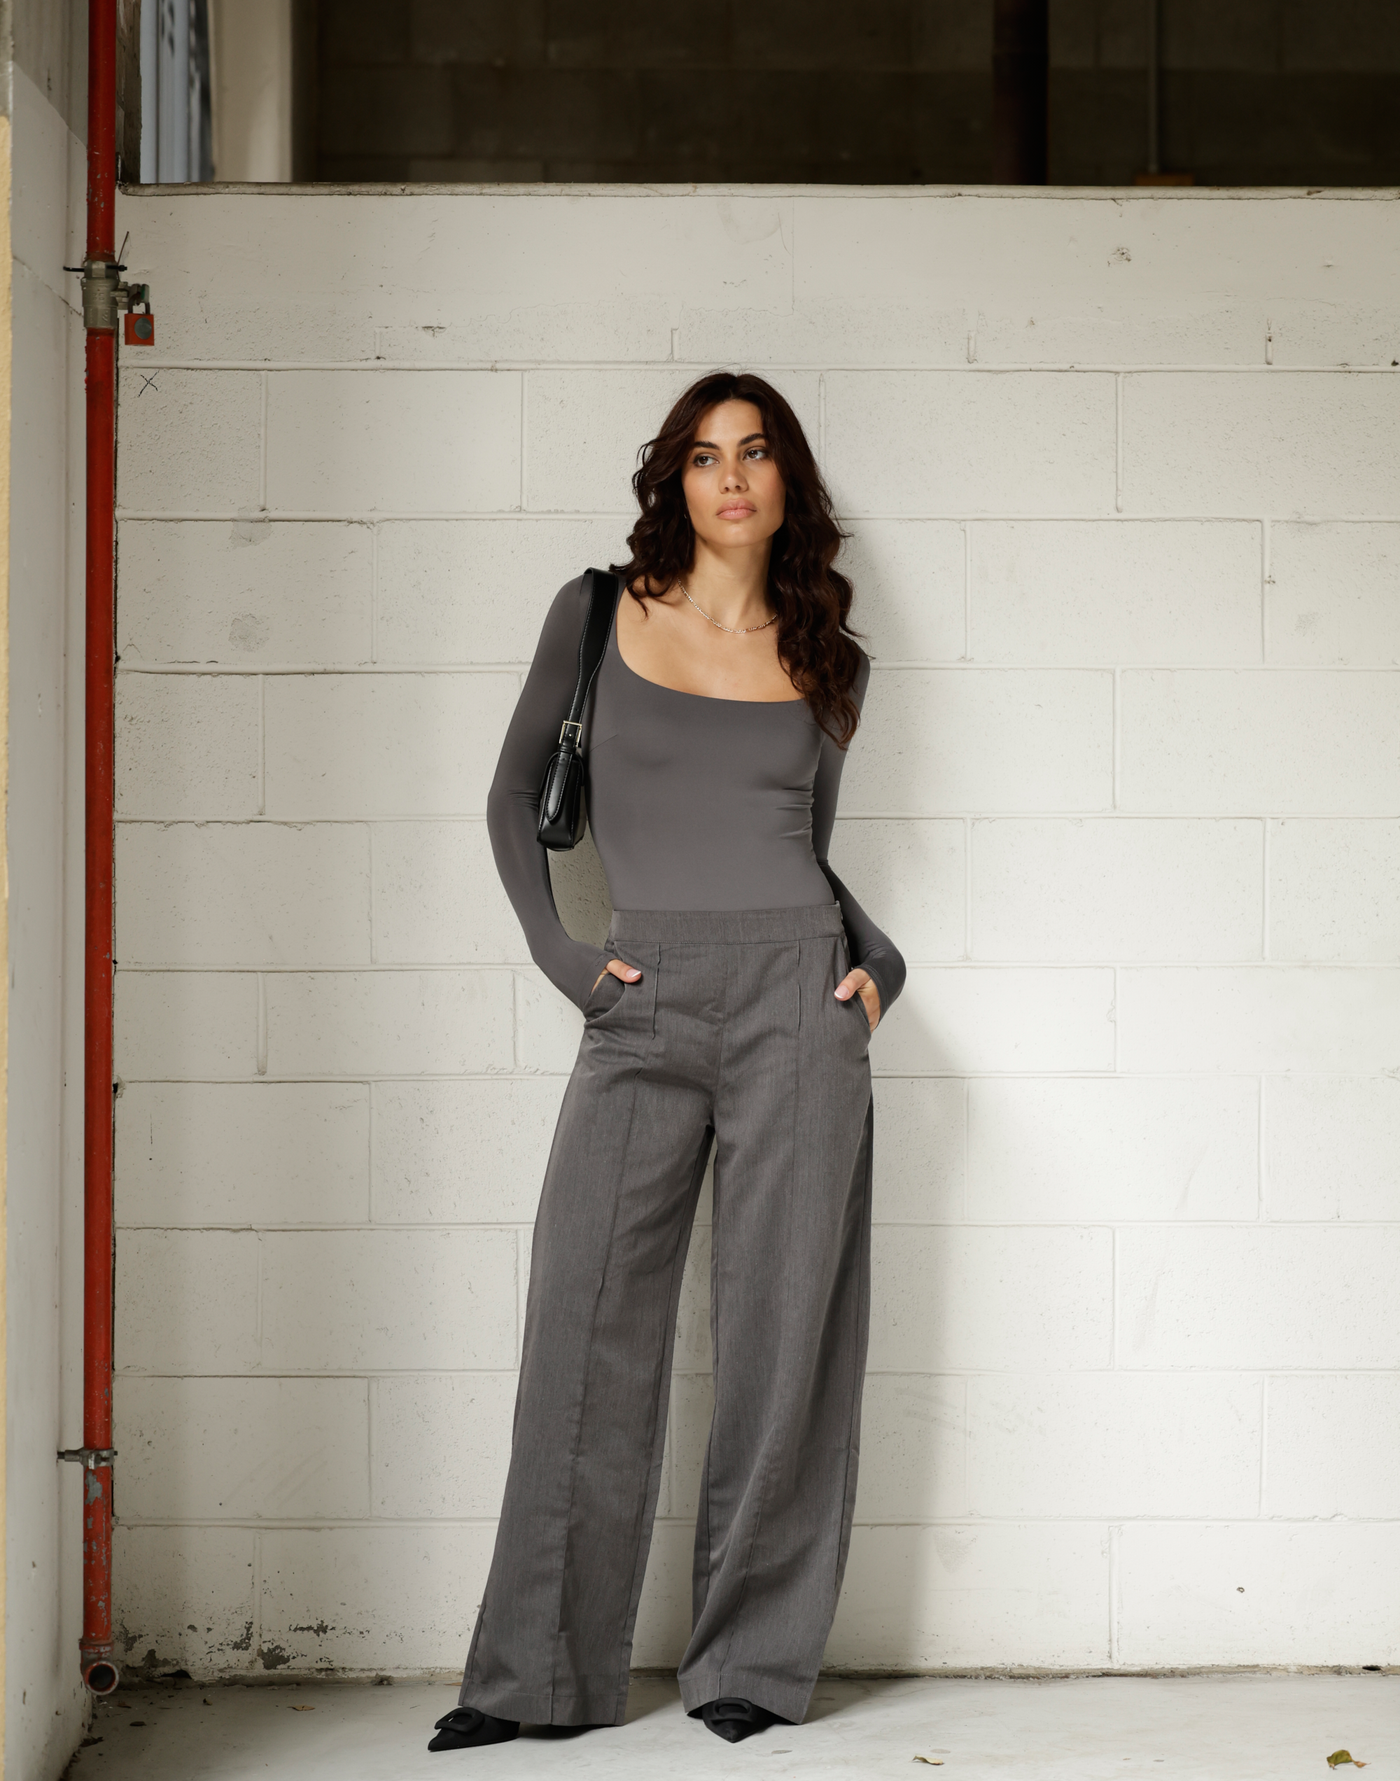 Cartea Pants (Grey) - Wide Leg Pants - Women's Pants - Charcoal Clothing